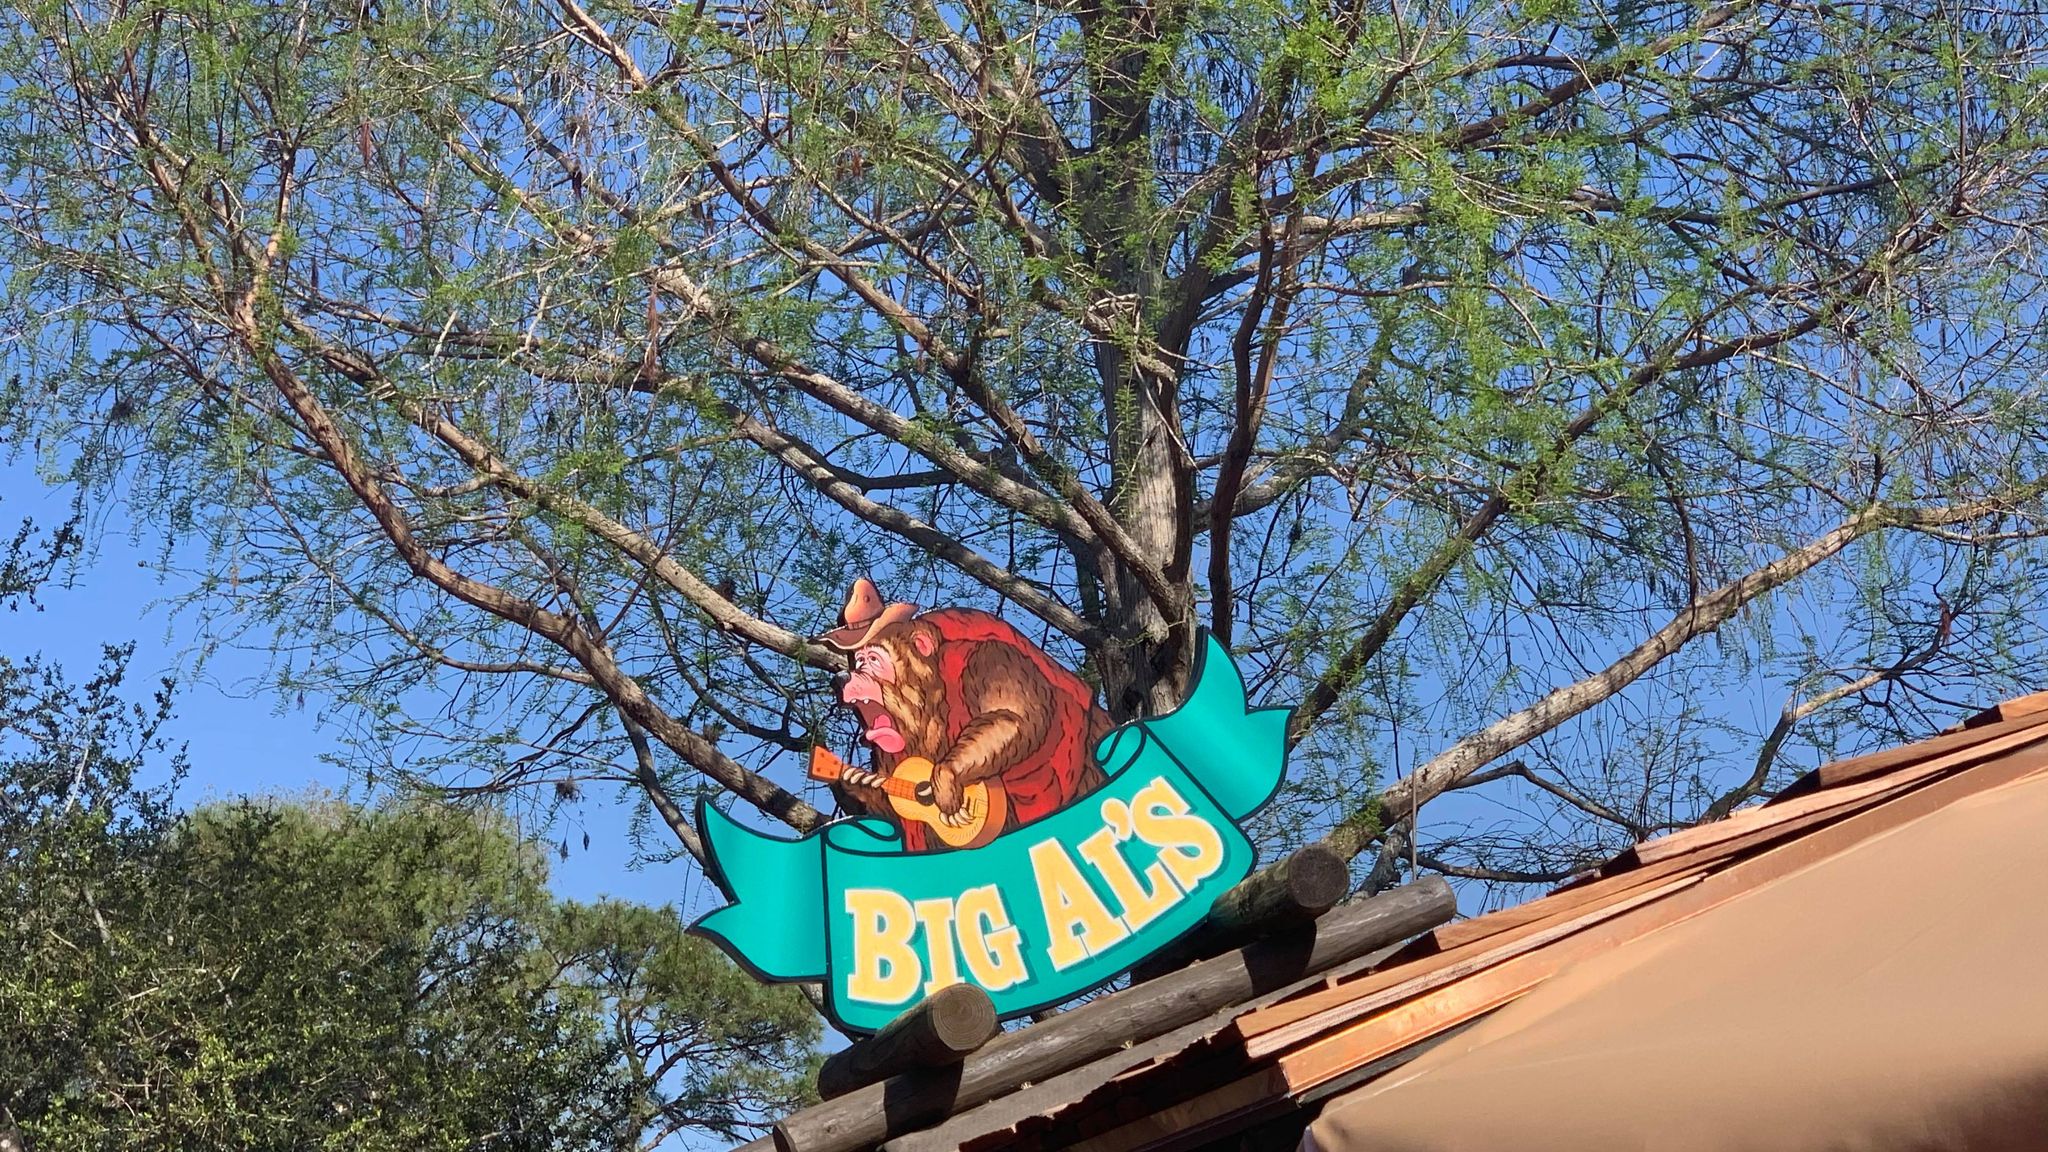 Big Al’s Merchandise Kiosk in Magic Kingdom Receives a New Sign